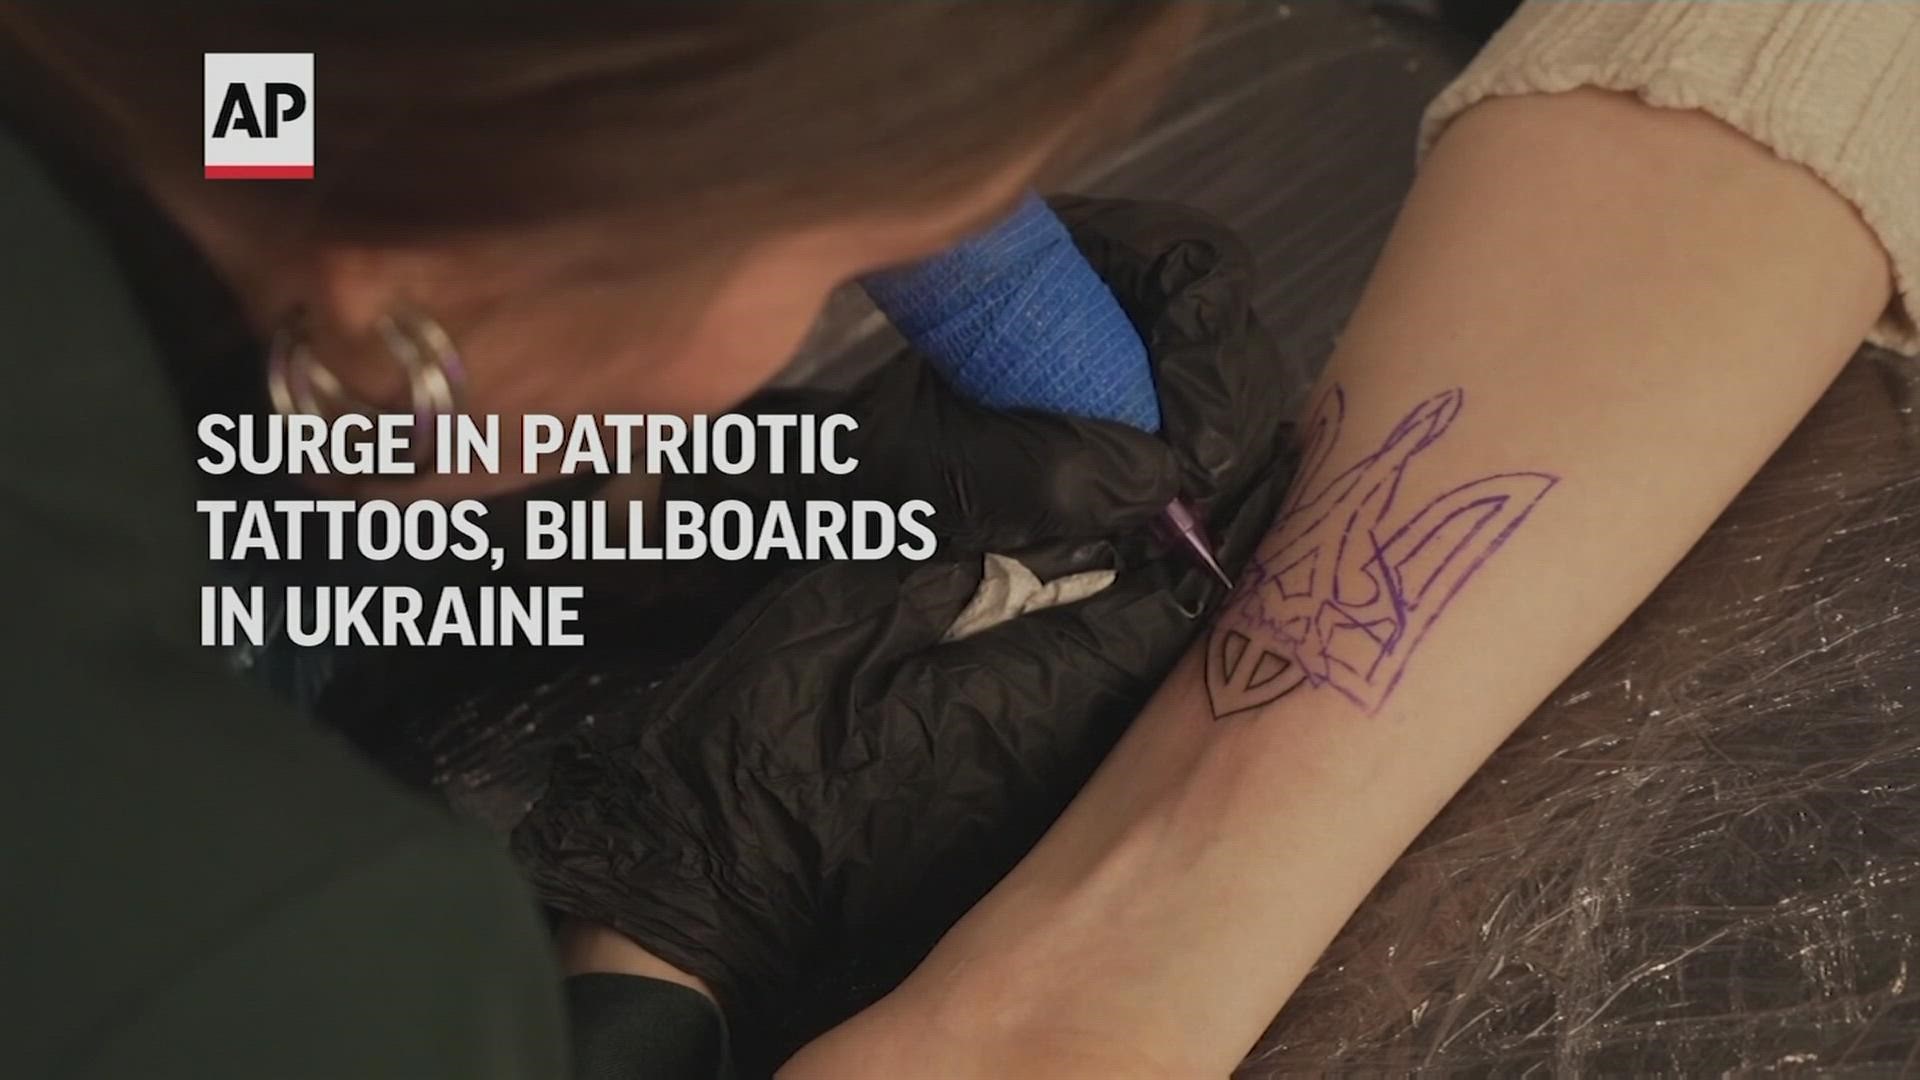 Patriotic tattoos, billboards popular in Ukraine 